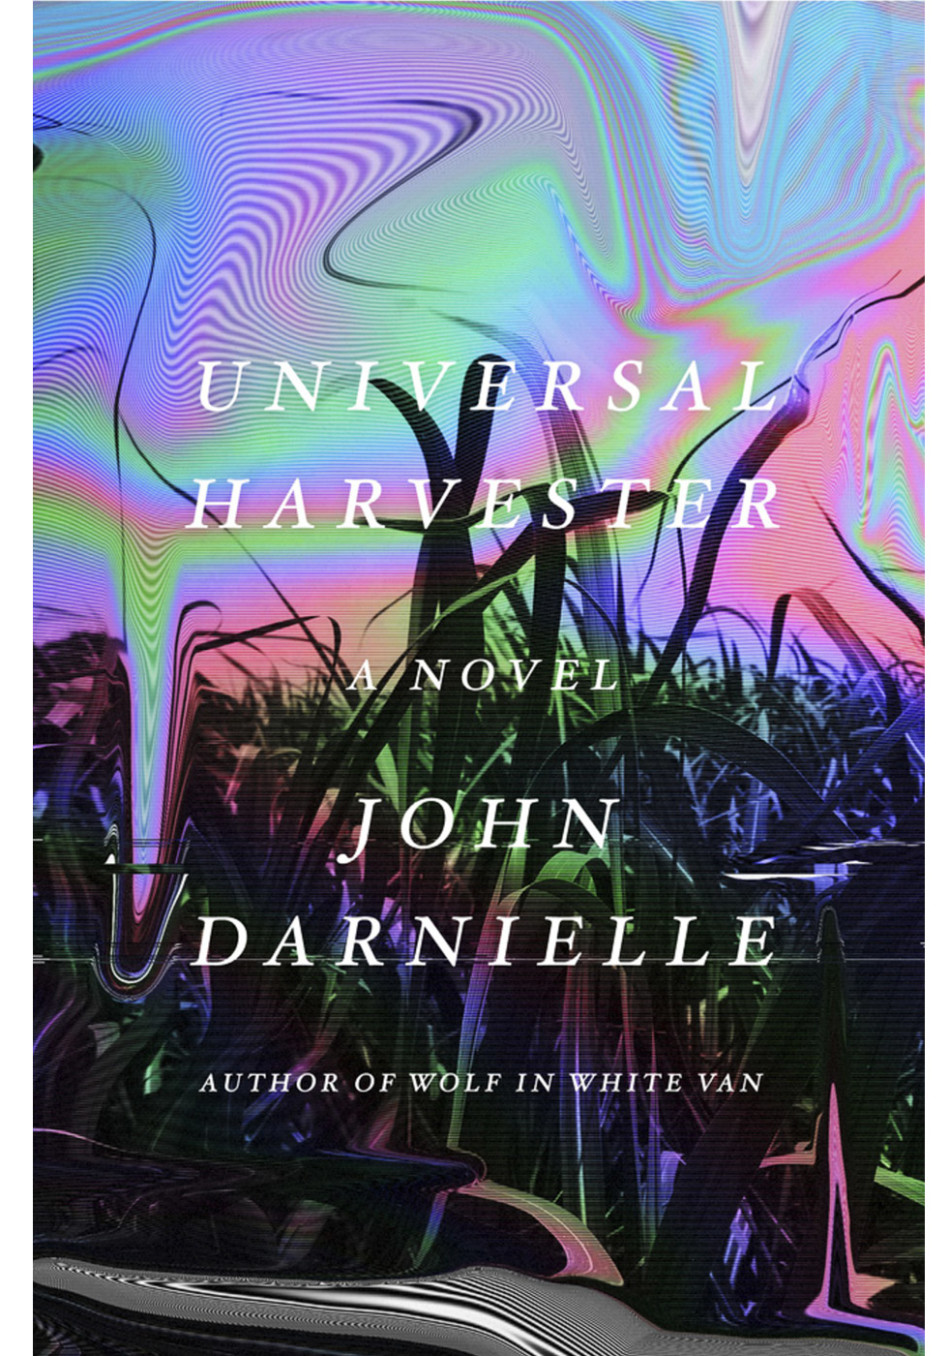 Universal Harvester cover